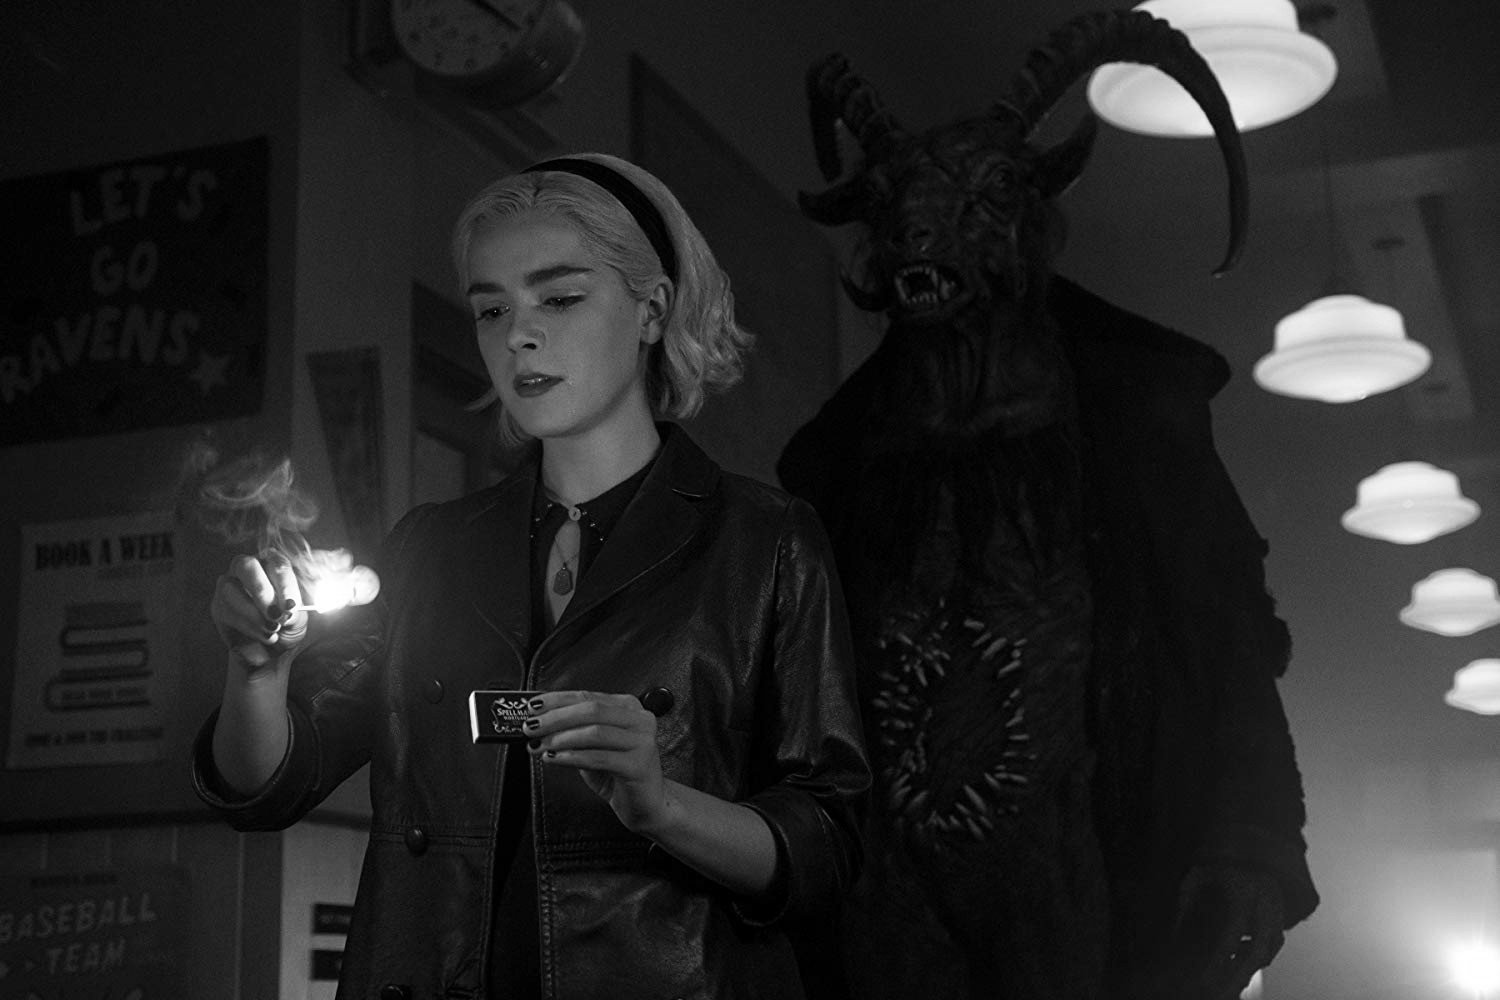 Sabrina summons from hell